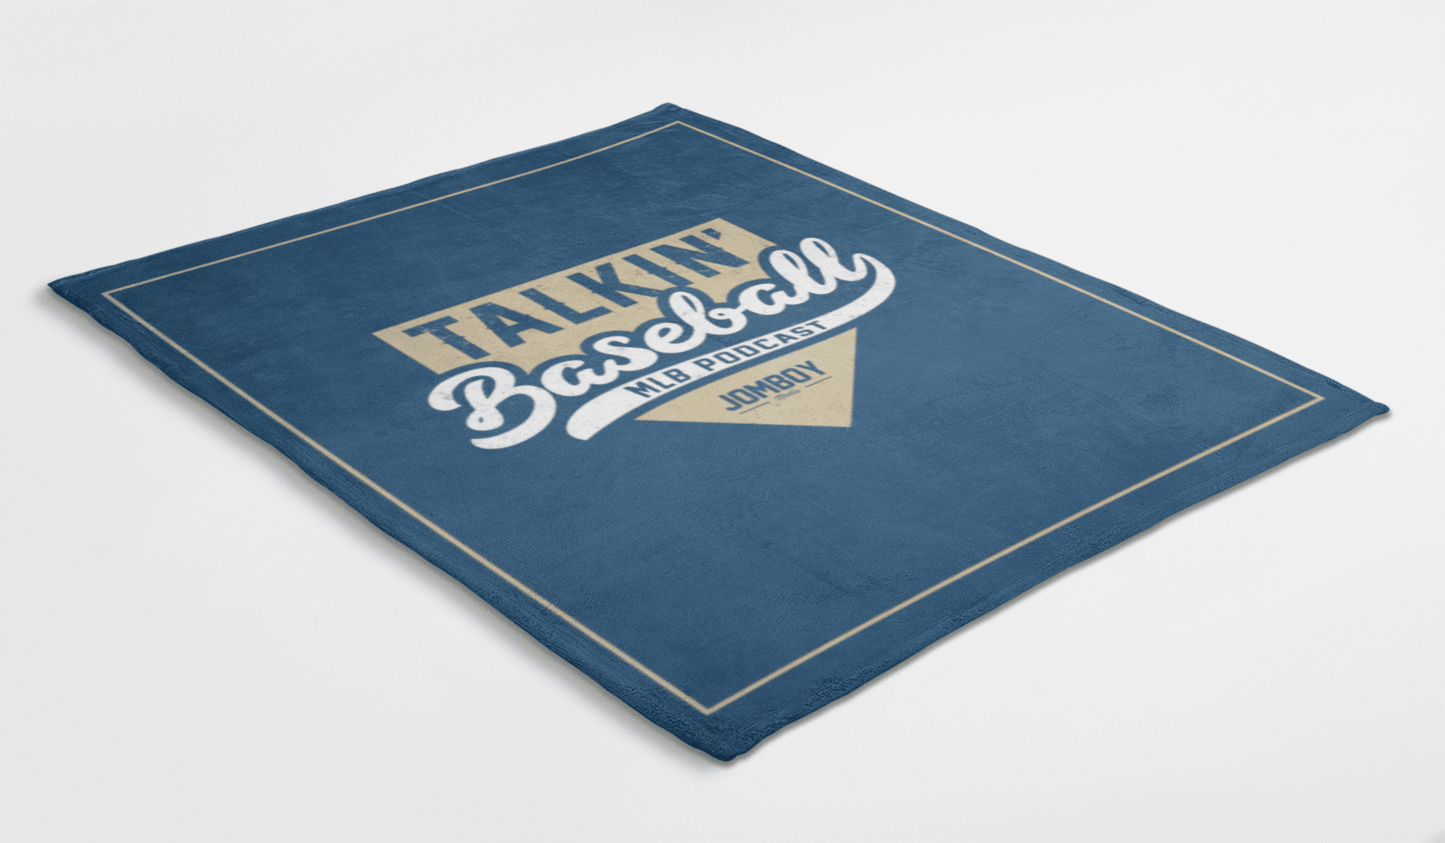 Talkin' Baseball | Blanket - Jomboy Media